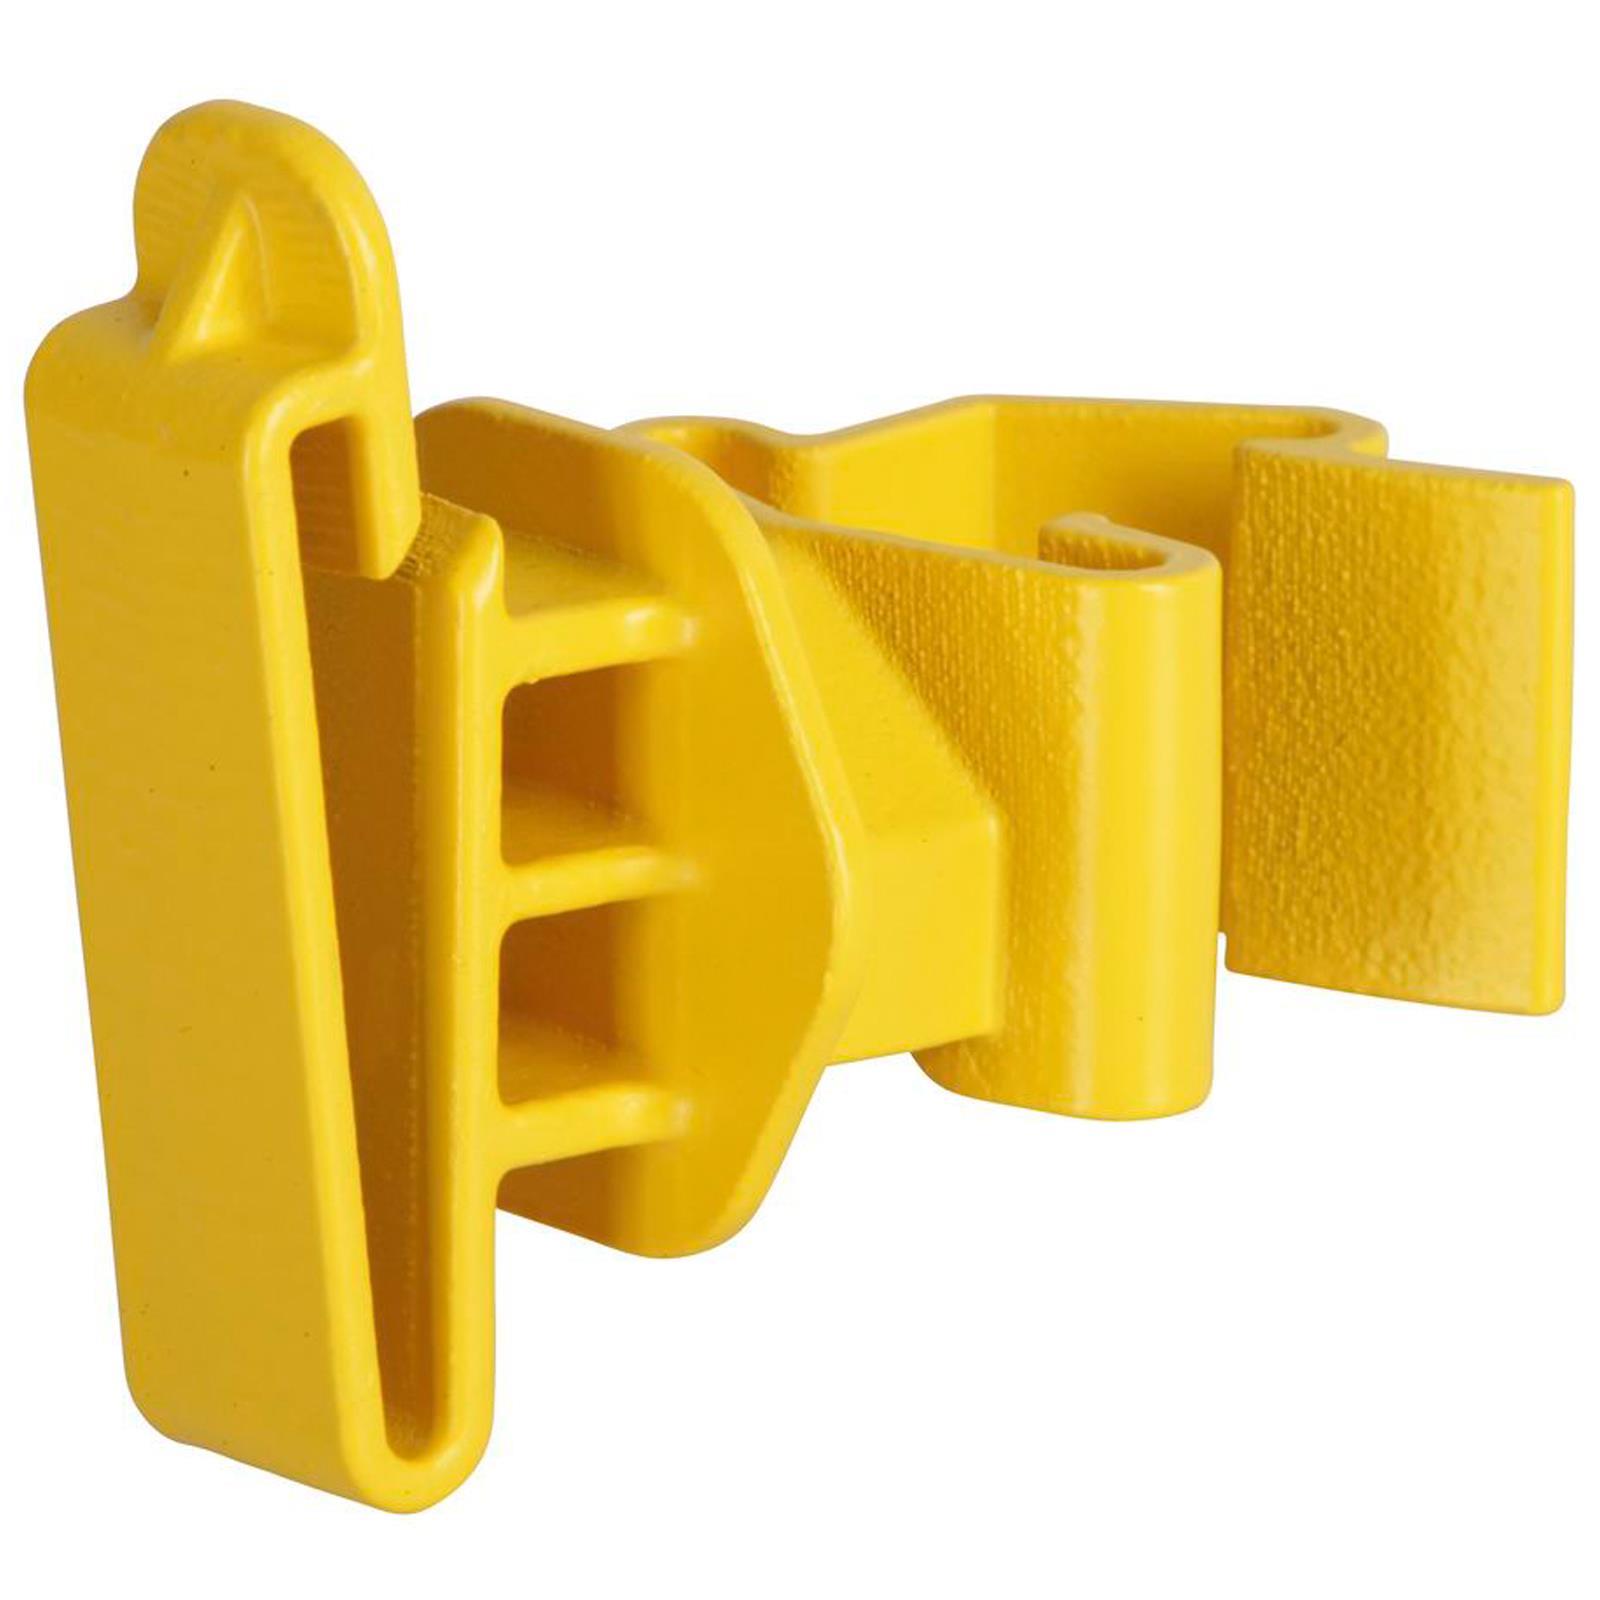 25x Agrarzone T-Post tape insulator yellow